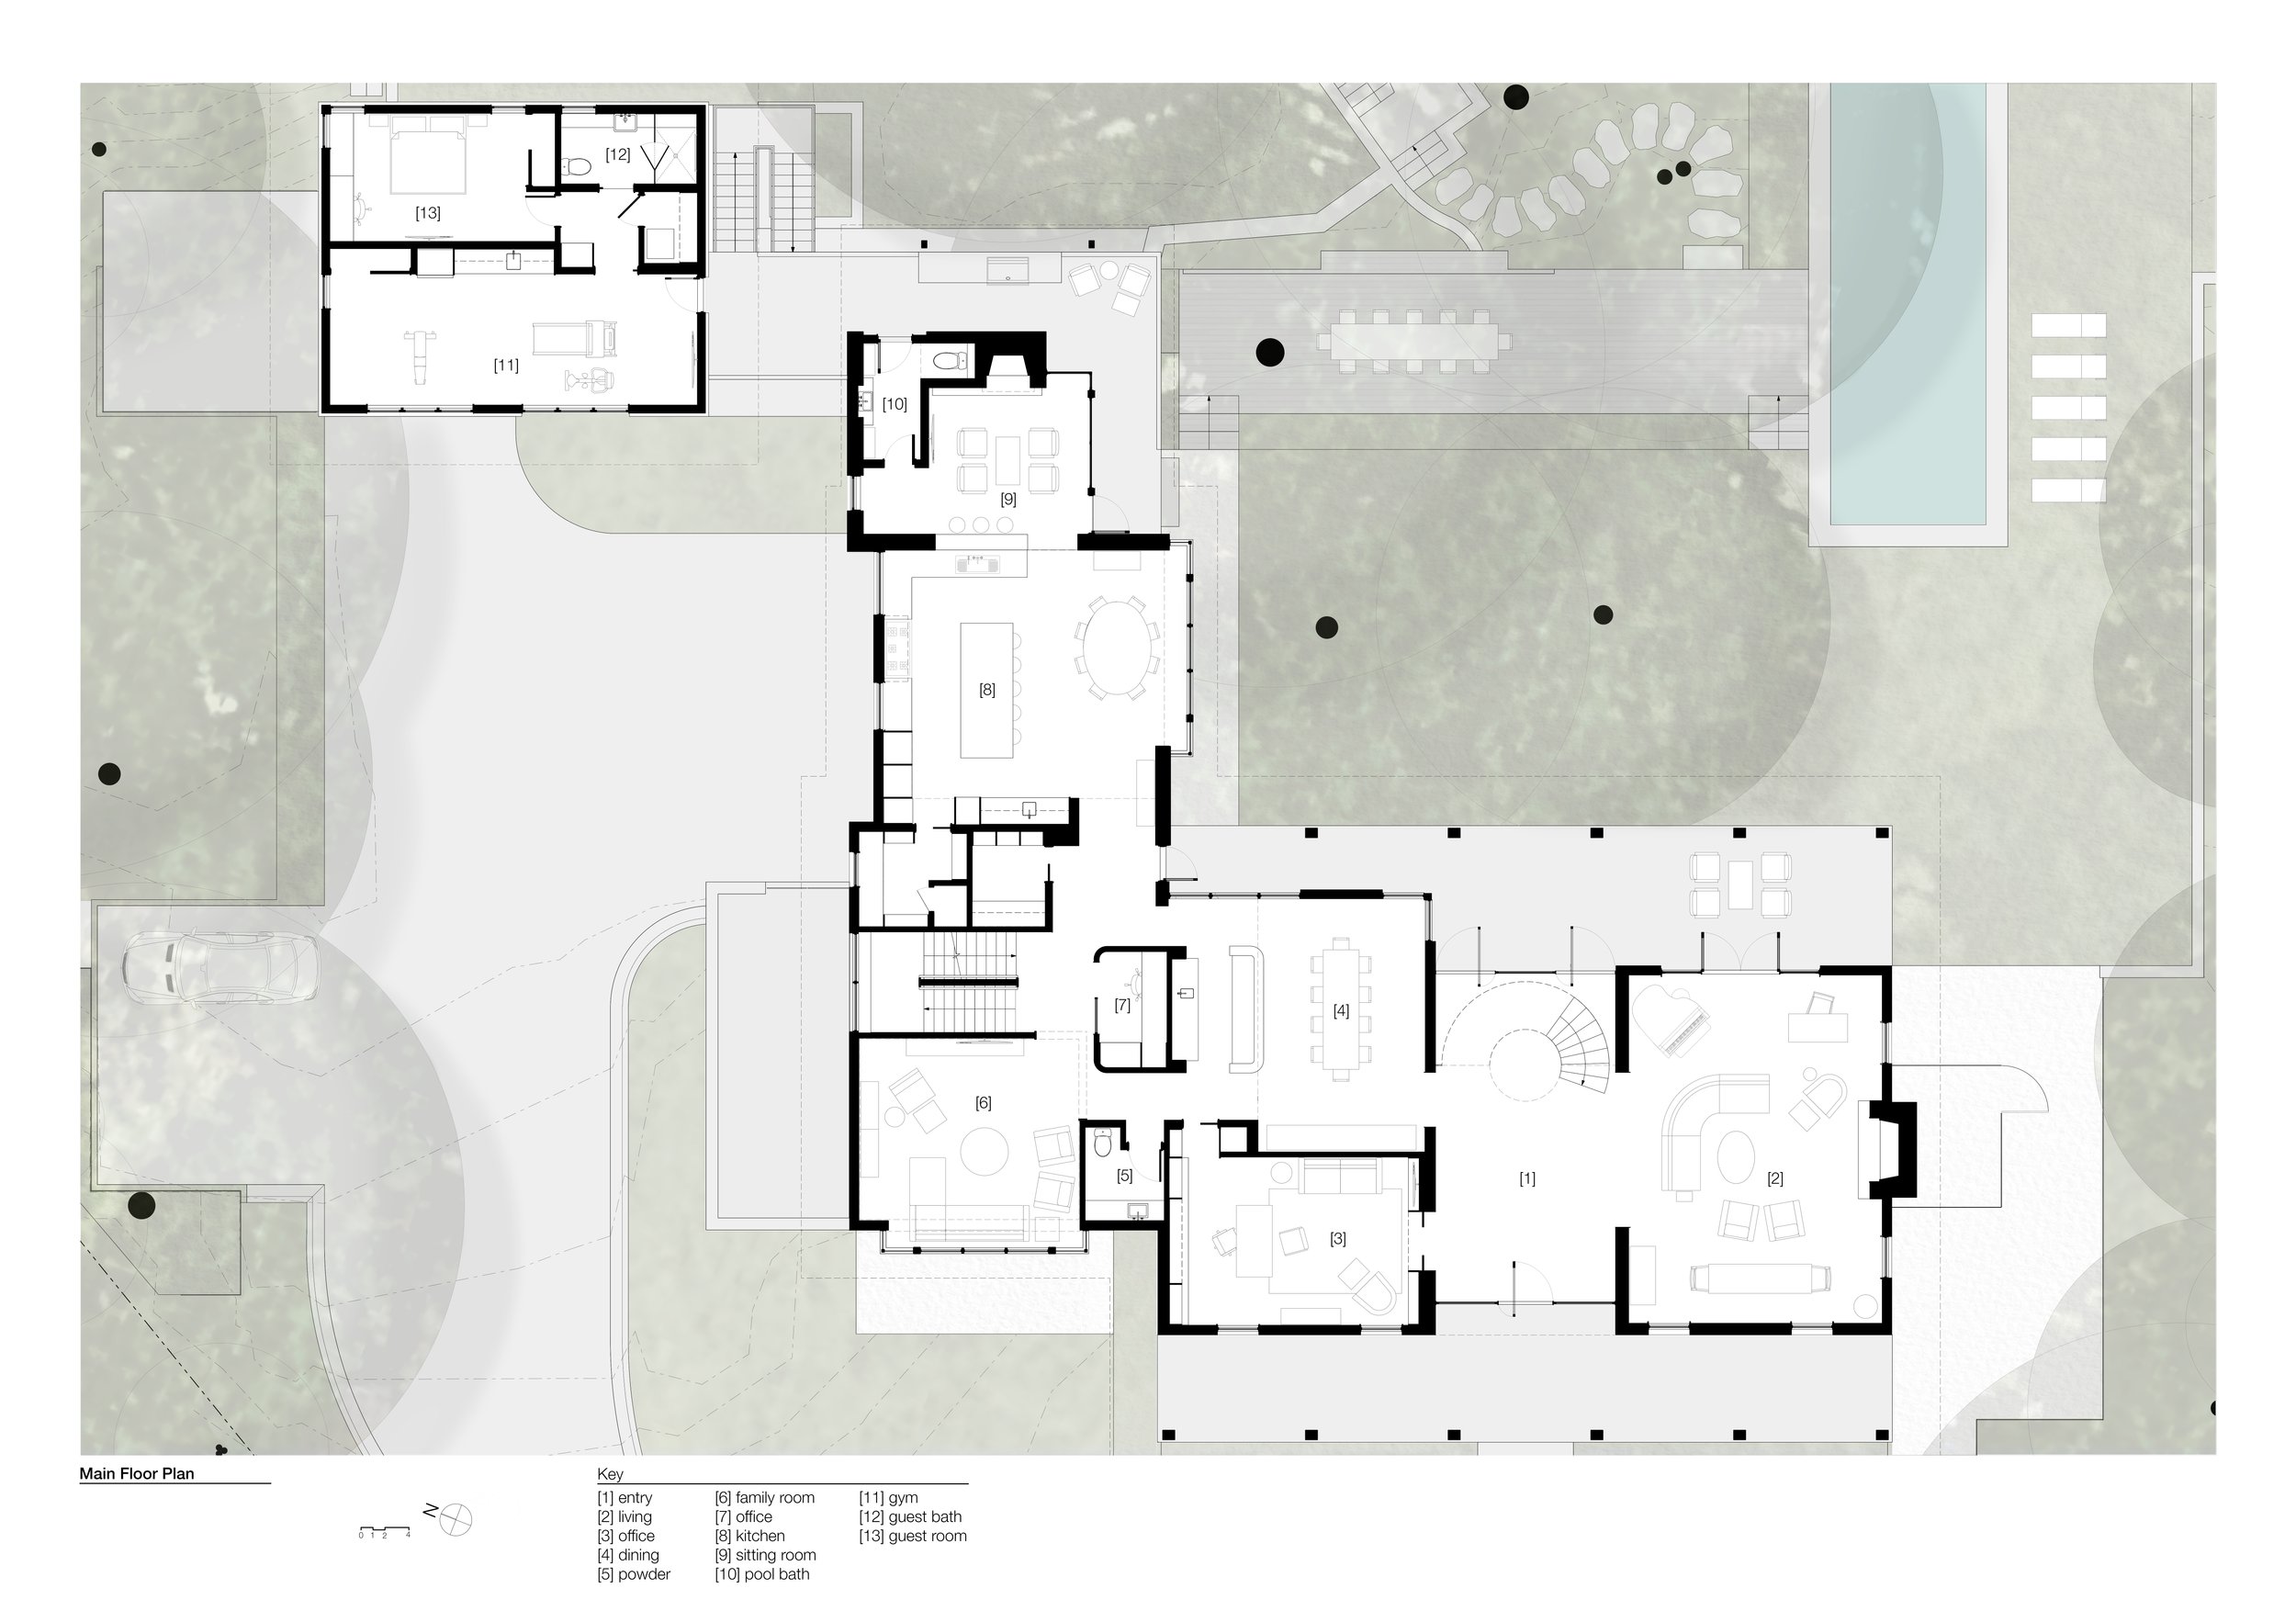 Main Floor Plan.jpg